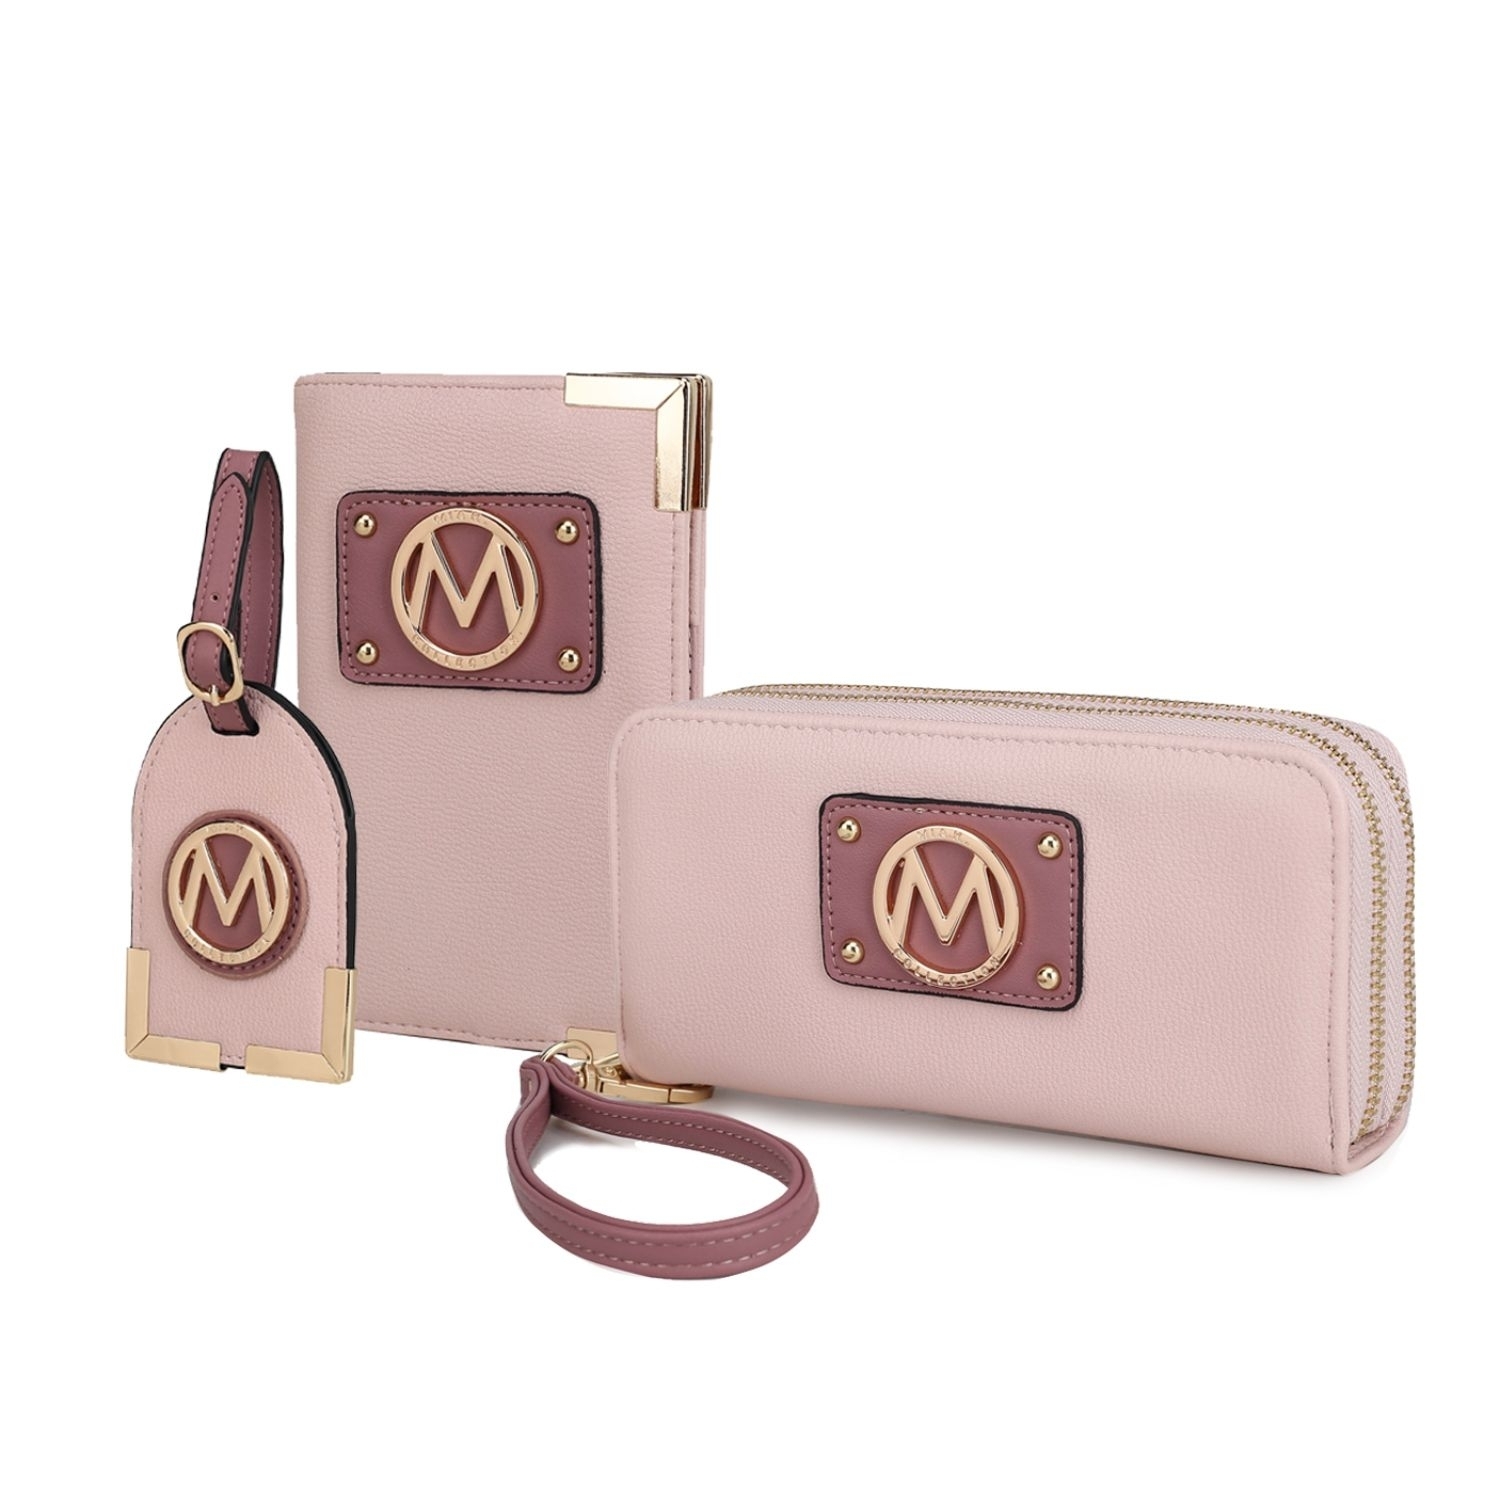 MKF Collection Darla Travel Gift Set Handbag By Mia K 3 Pieces - Pewter